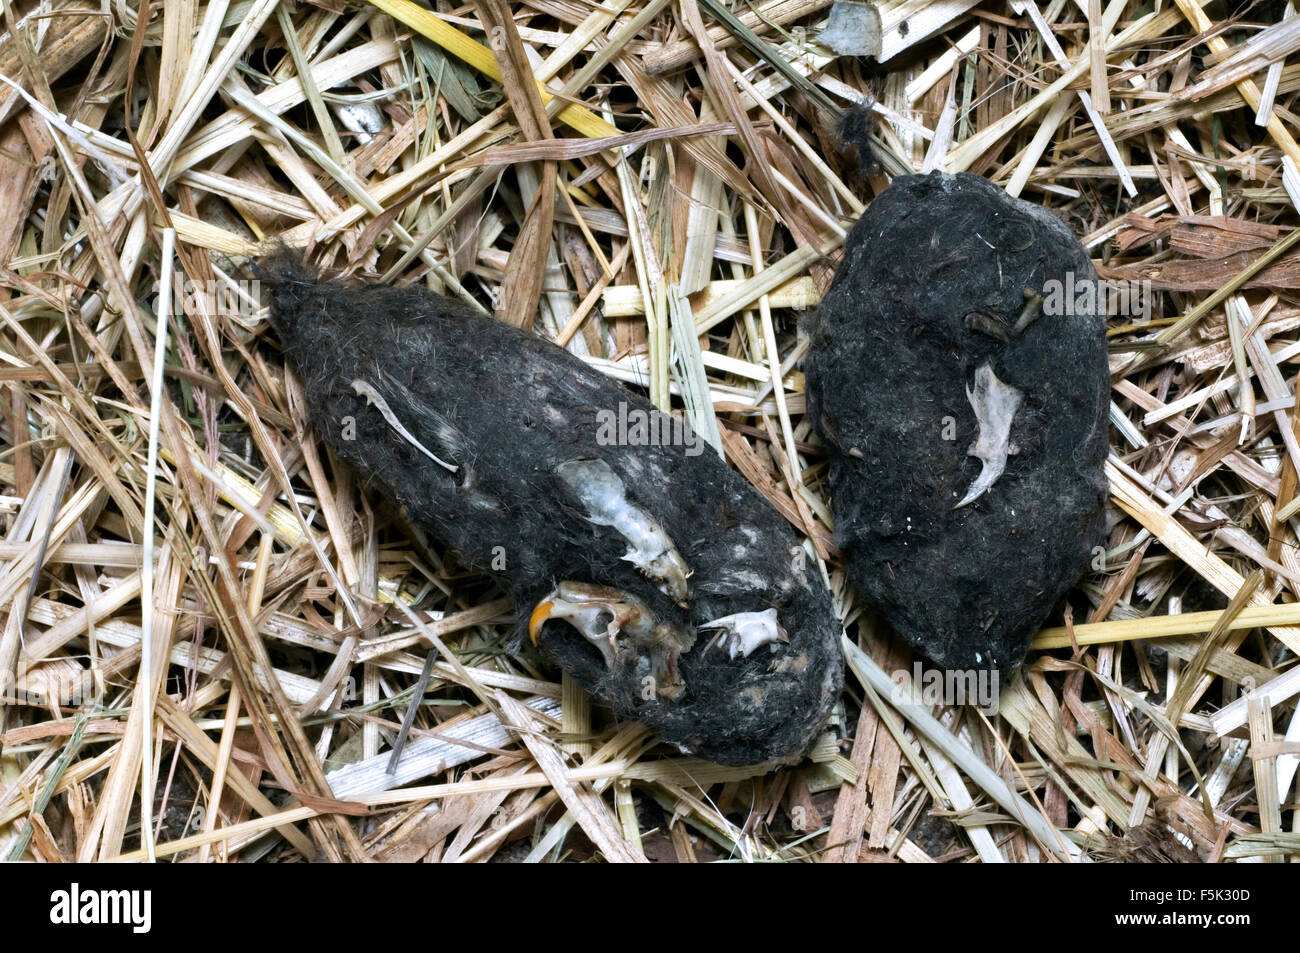 Barn owl (Tyto alba) pellets on hay showing skulls and bones of mice Stock Photo